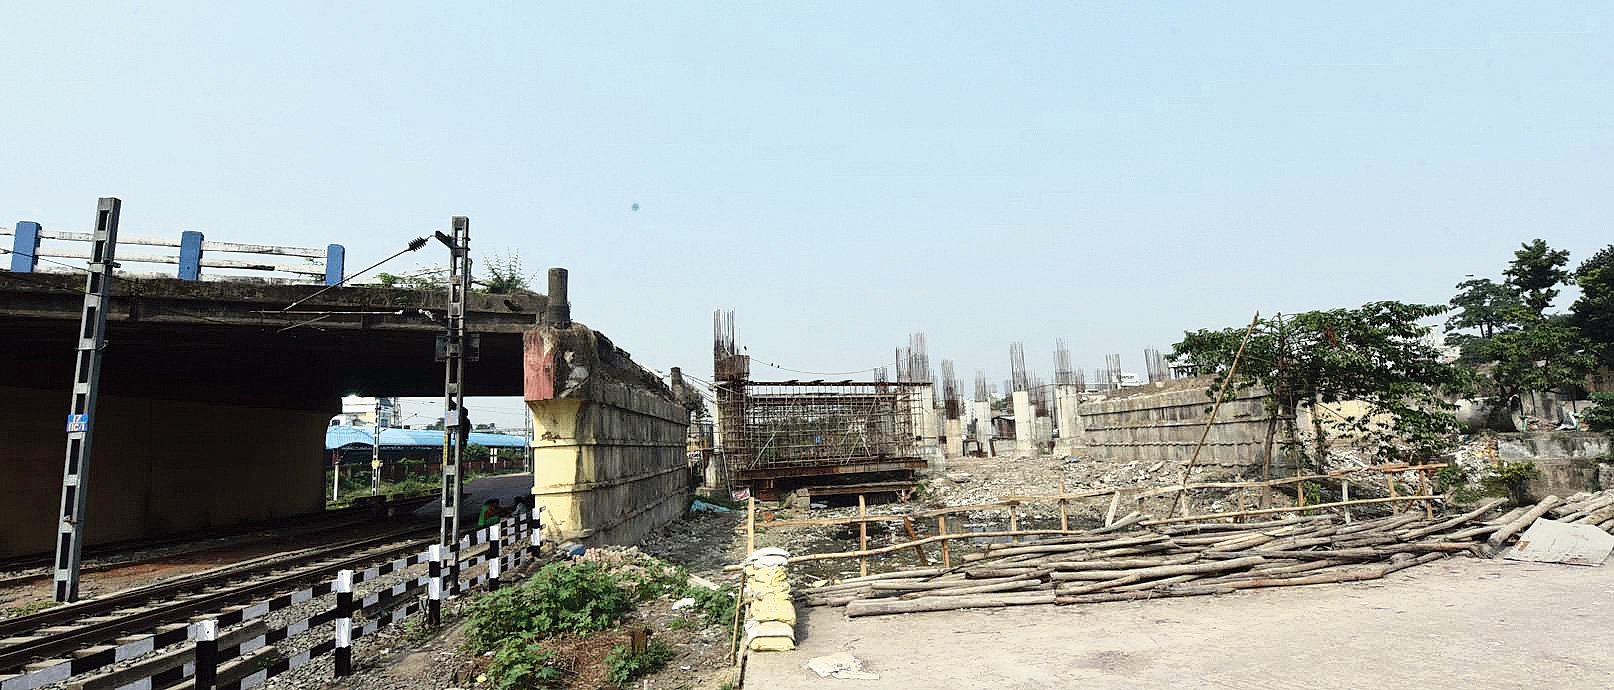 A portion of the Majerhat bridge above the railway tracks